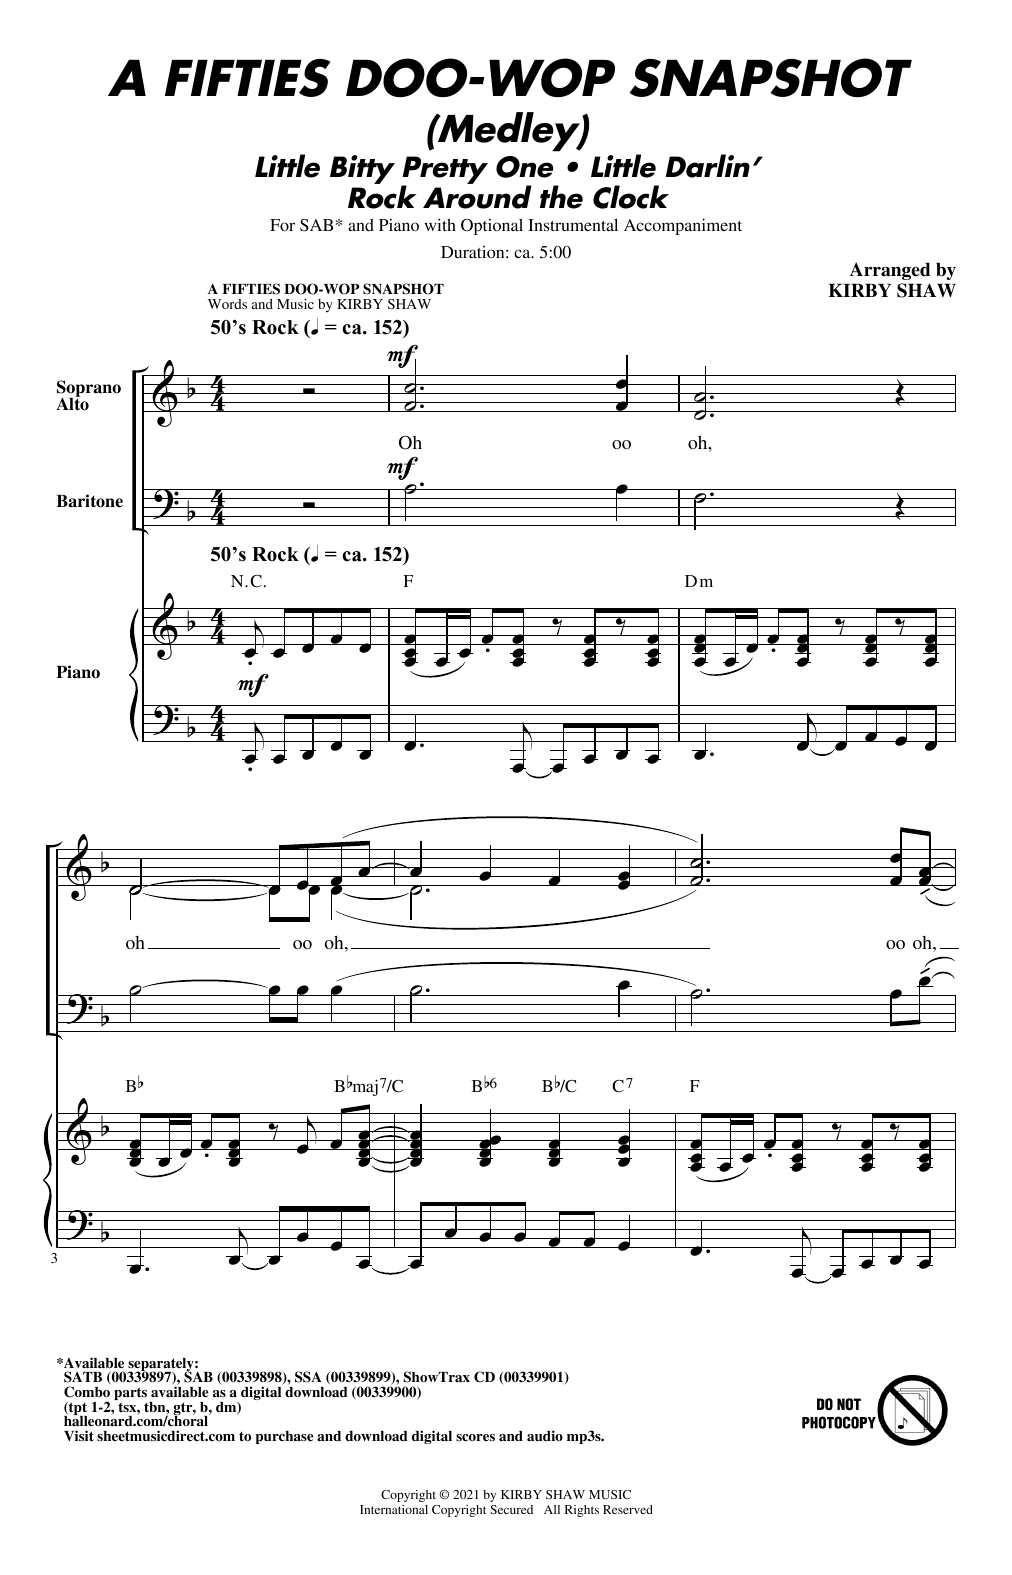 Kirby Shaw A Fifties Doo-Wop Snapshot (Medley) Sheet Music Notes & Chords for SATB Choir - Download or Print PDF